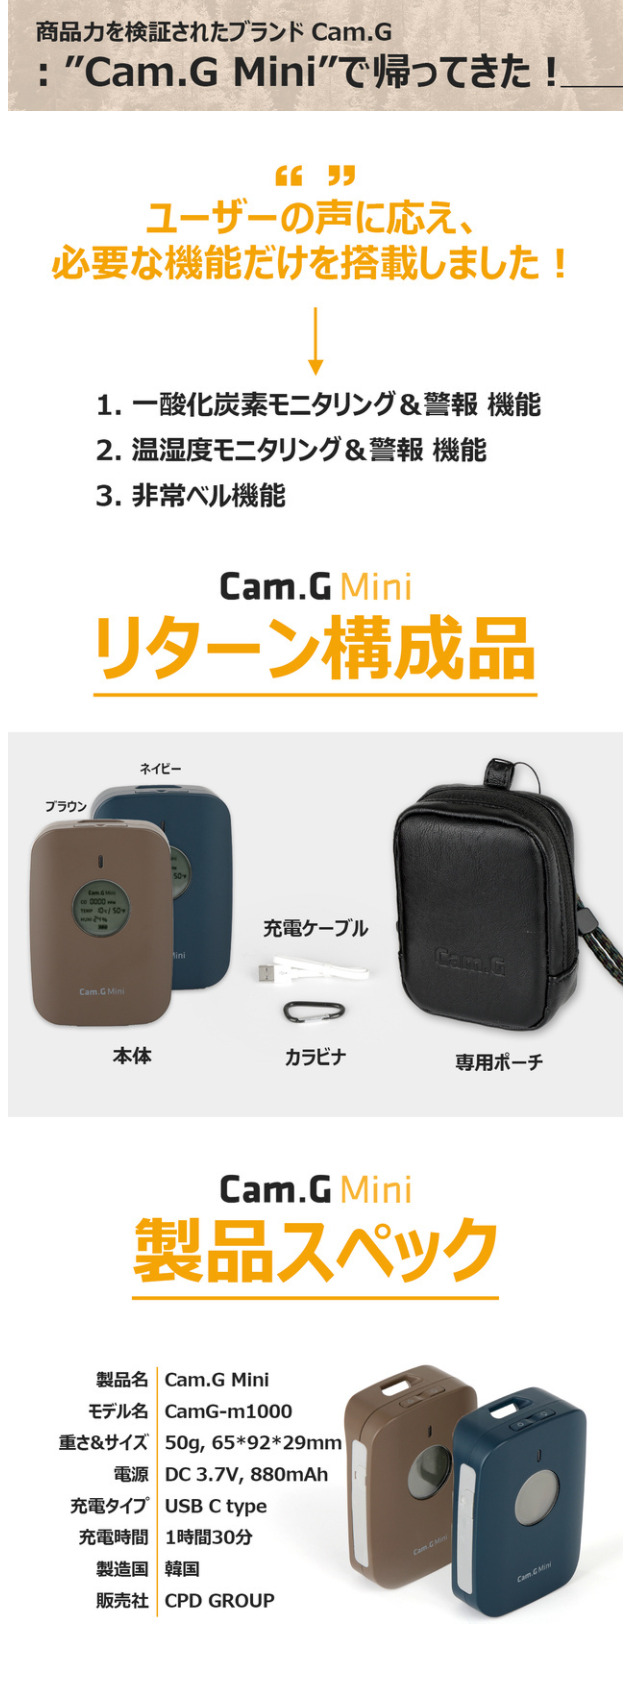 Cam.G Mini